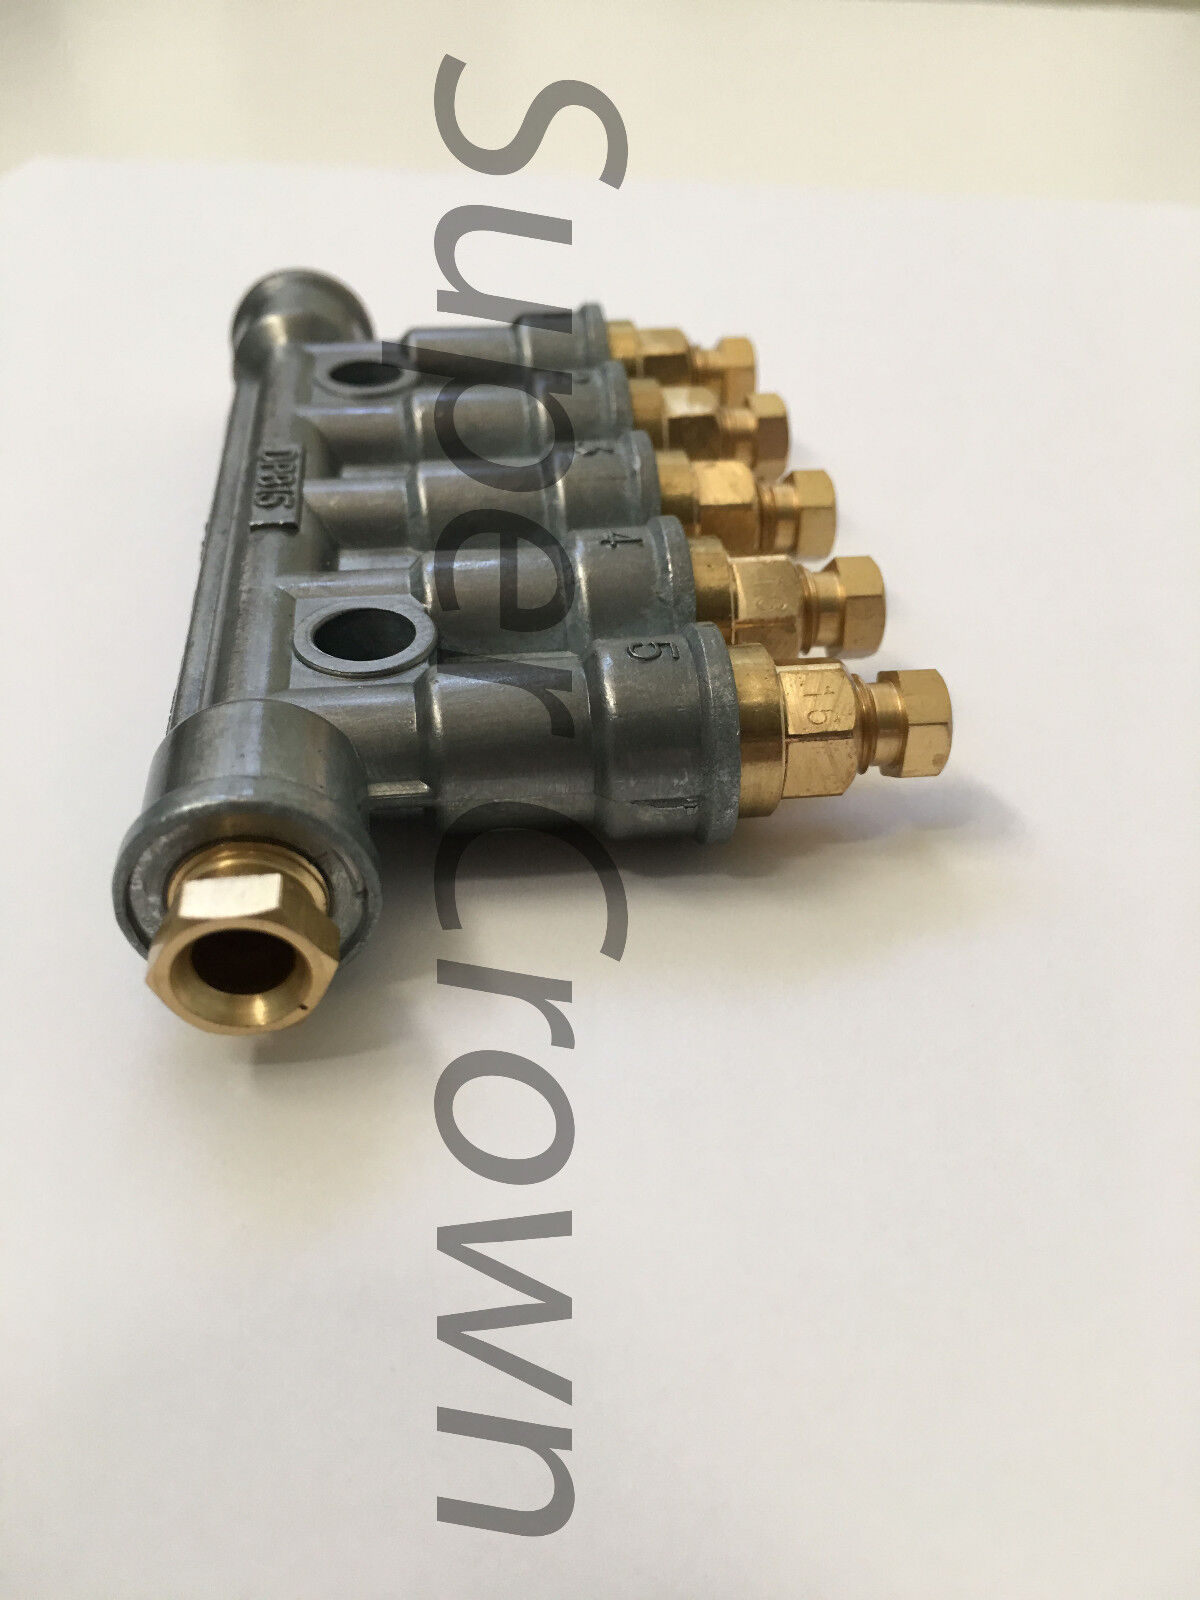 Super Crown Dester Plunger Piston Action Volumetric Oil CNC Showa DPB-15 0.06CC Nowe, oryginalne